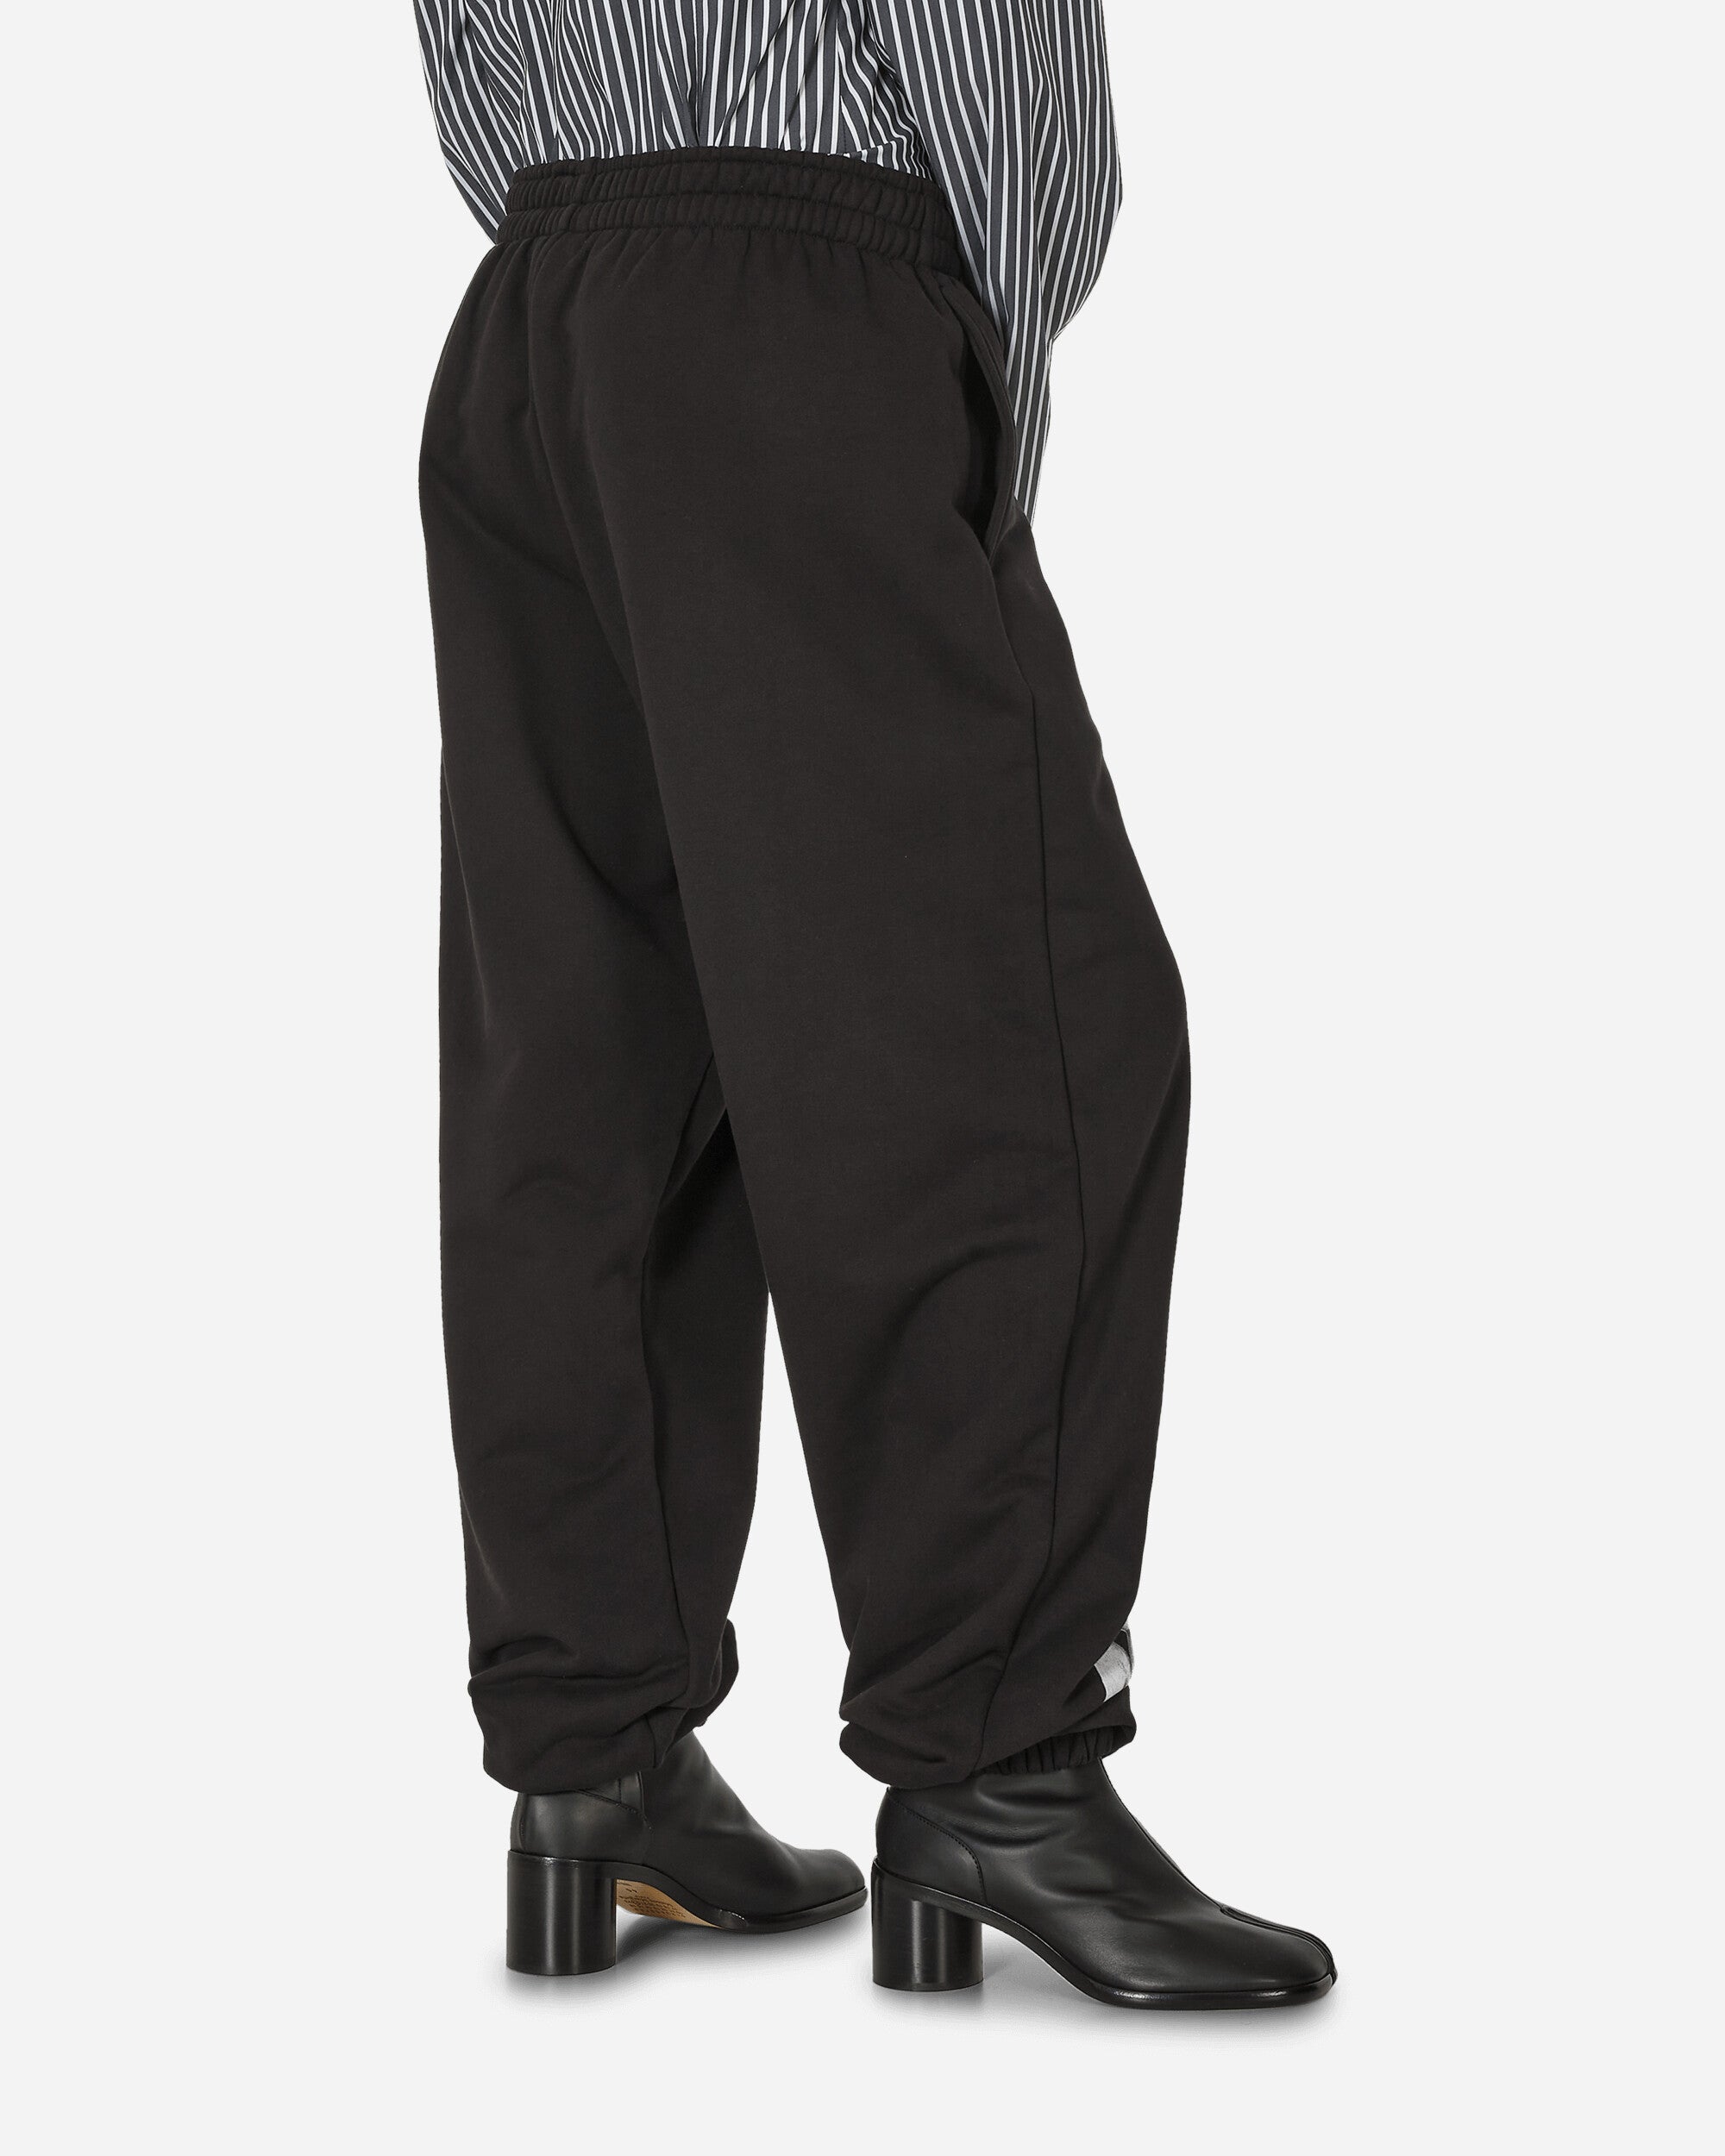 Sky High Farm Perennial Shana Graphic Pants Knit Black Pants Sweatpants SHF04P031  1